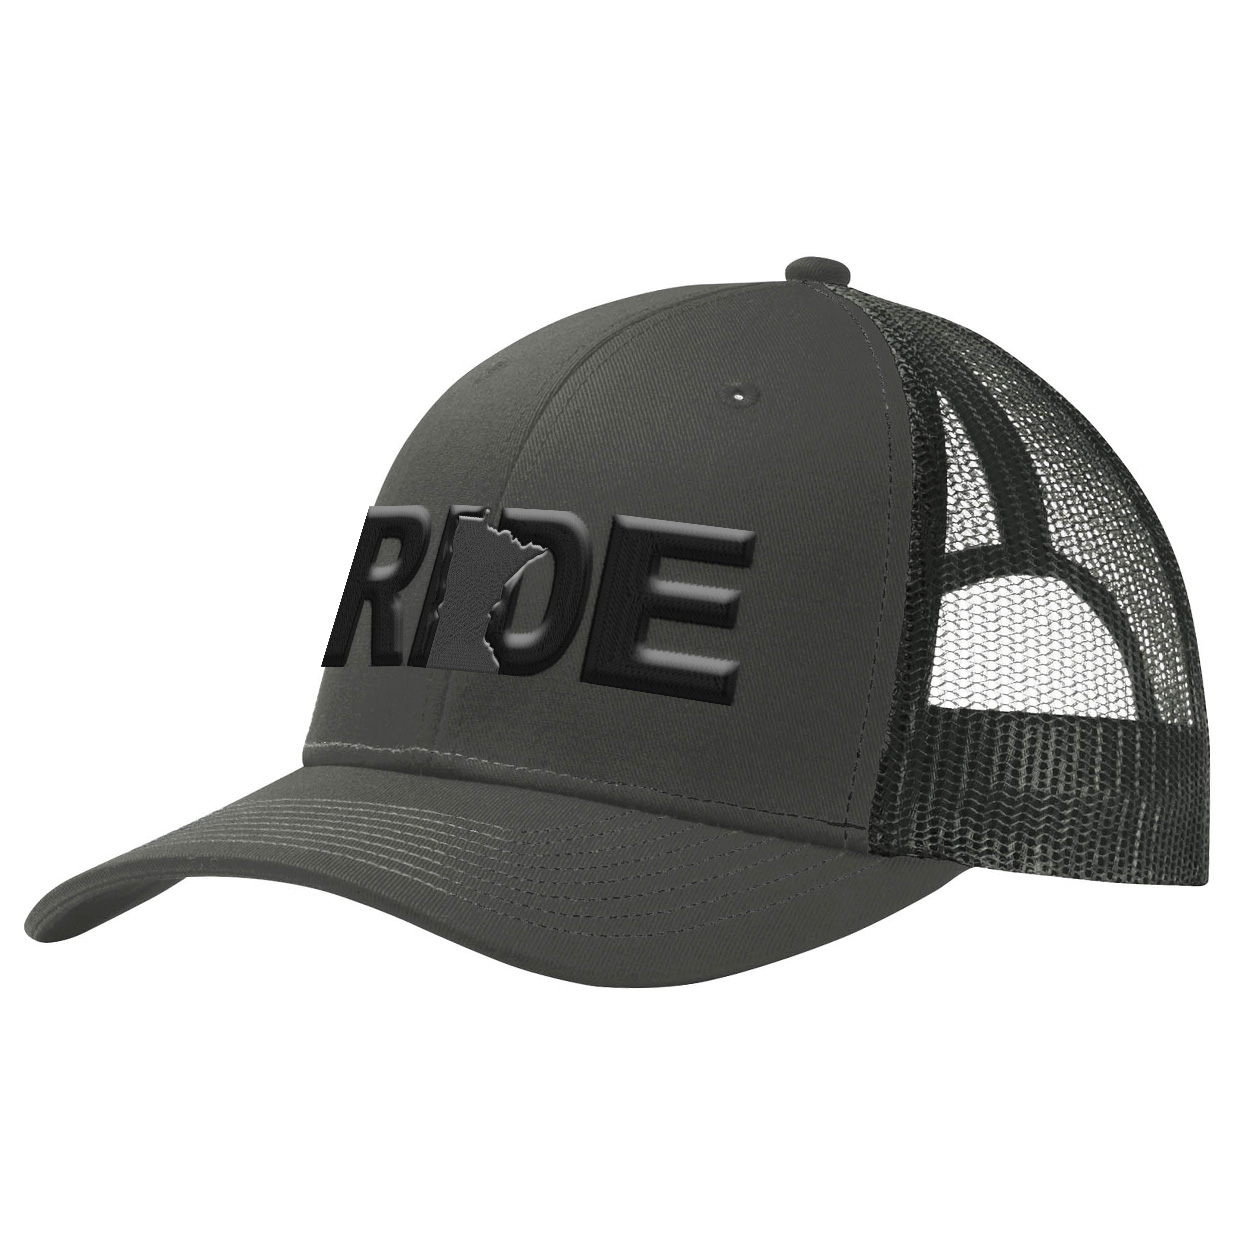 Ride Minnesota Classic Pro 3D Puff Embroidered Snapback Trucker Hat Gray/Black